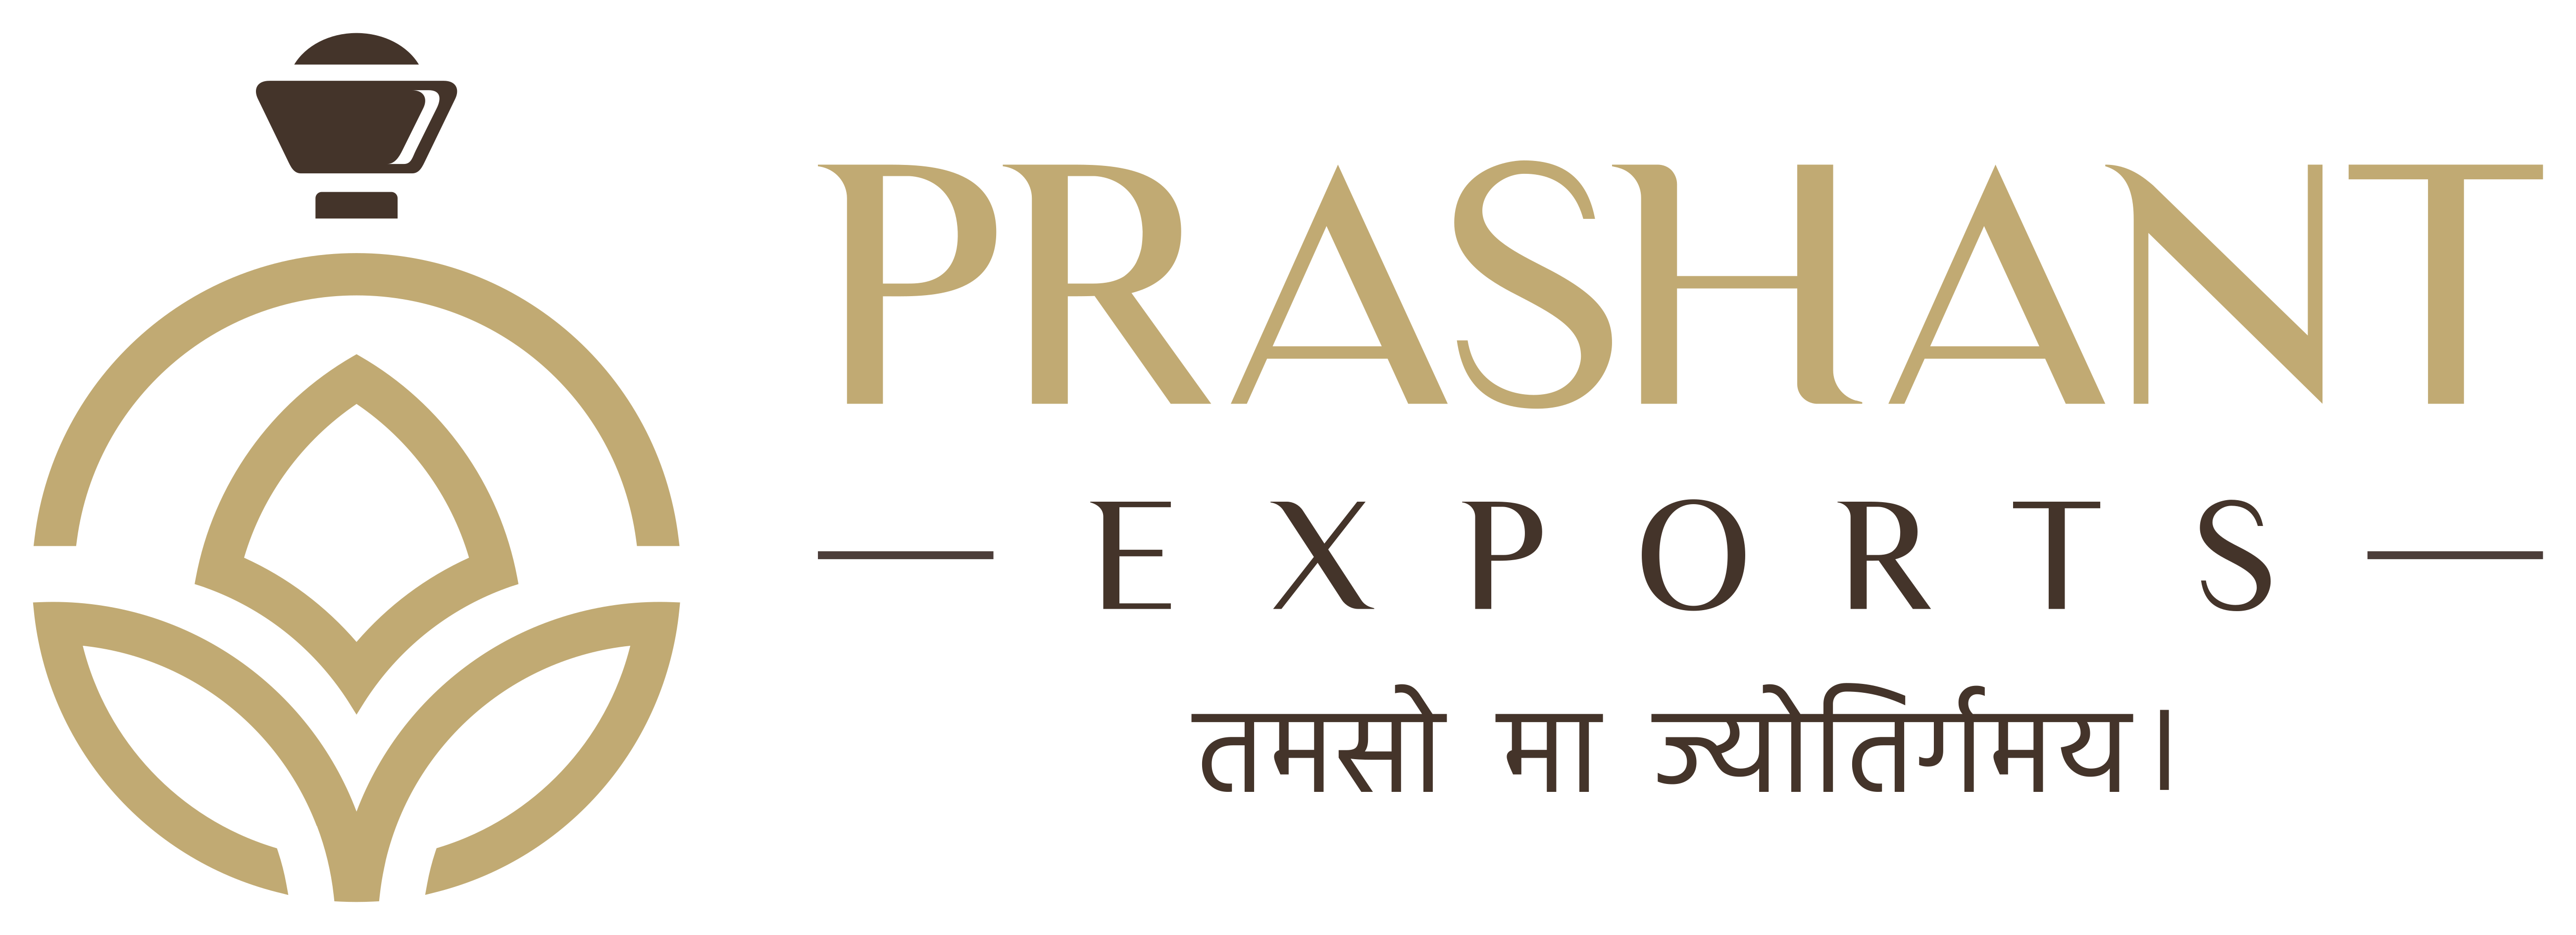 Prashant Exports